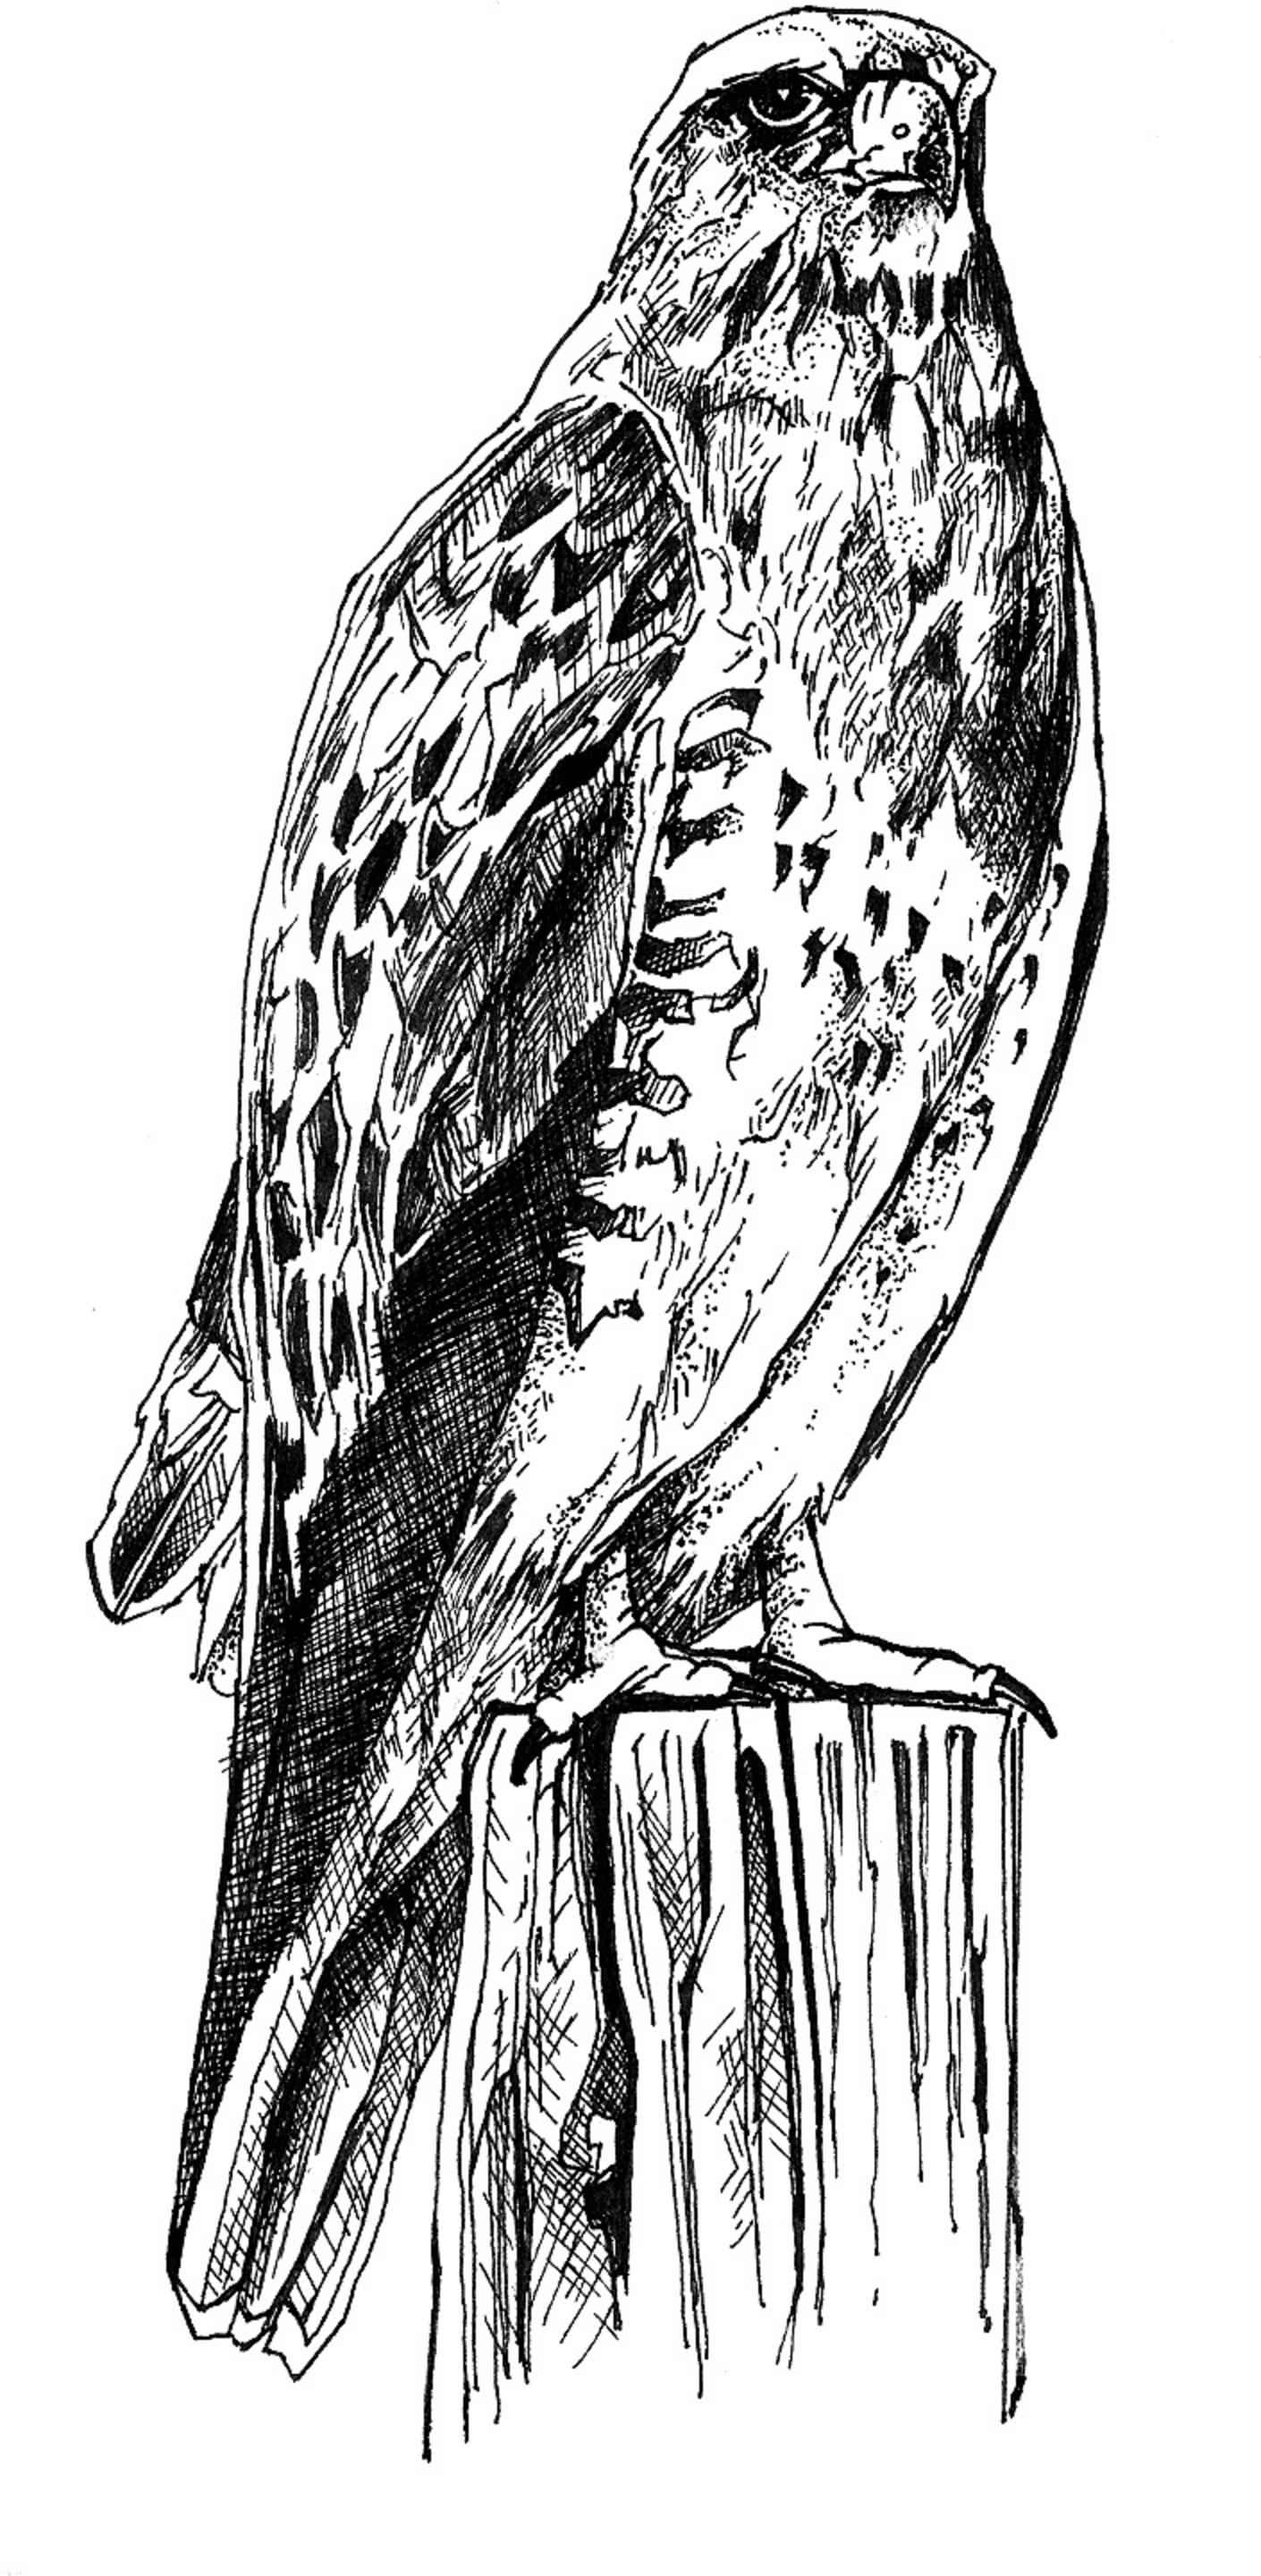 File:Black and white line art drawing of bird body.jpg - Wikimedia 